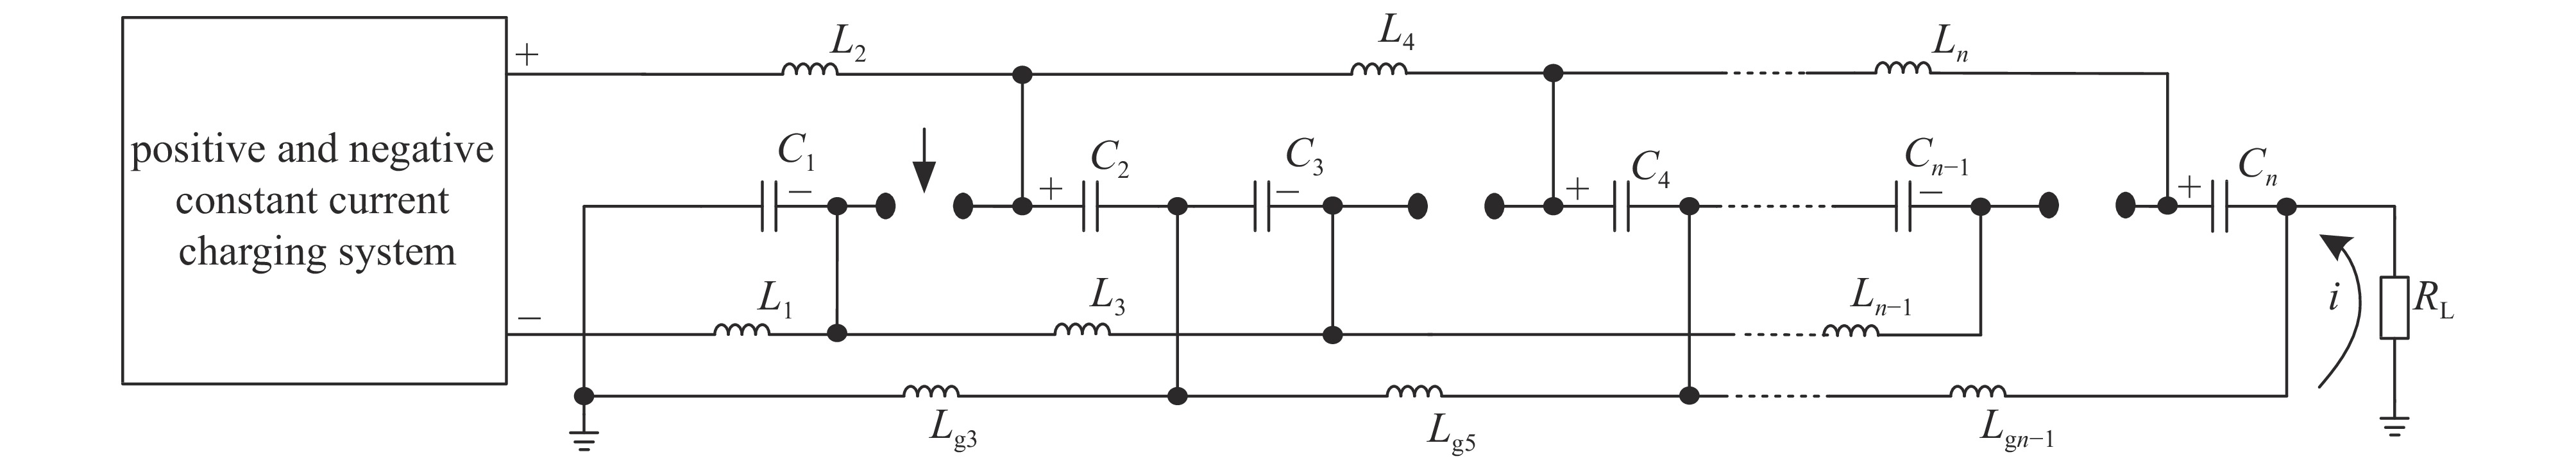 Circuit diagram of positive and negative charging Marx generator